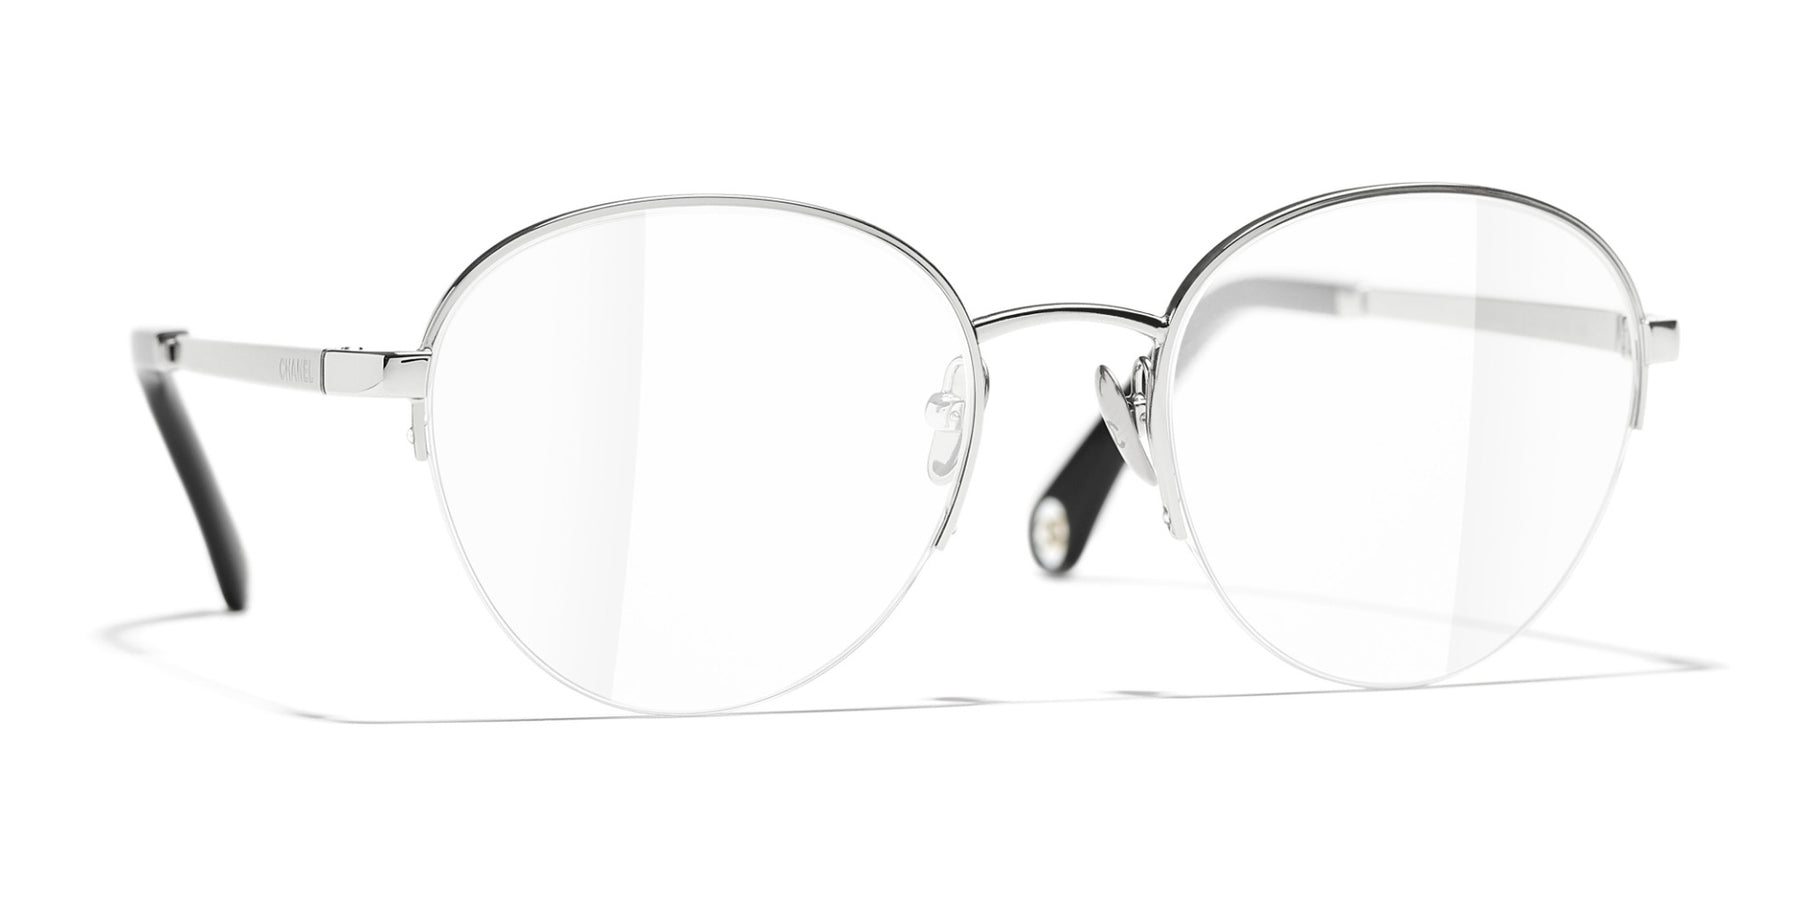 Shop CHANEL Round Eyeglasses by DaintyCloset